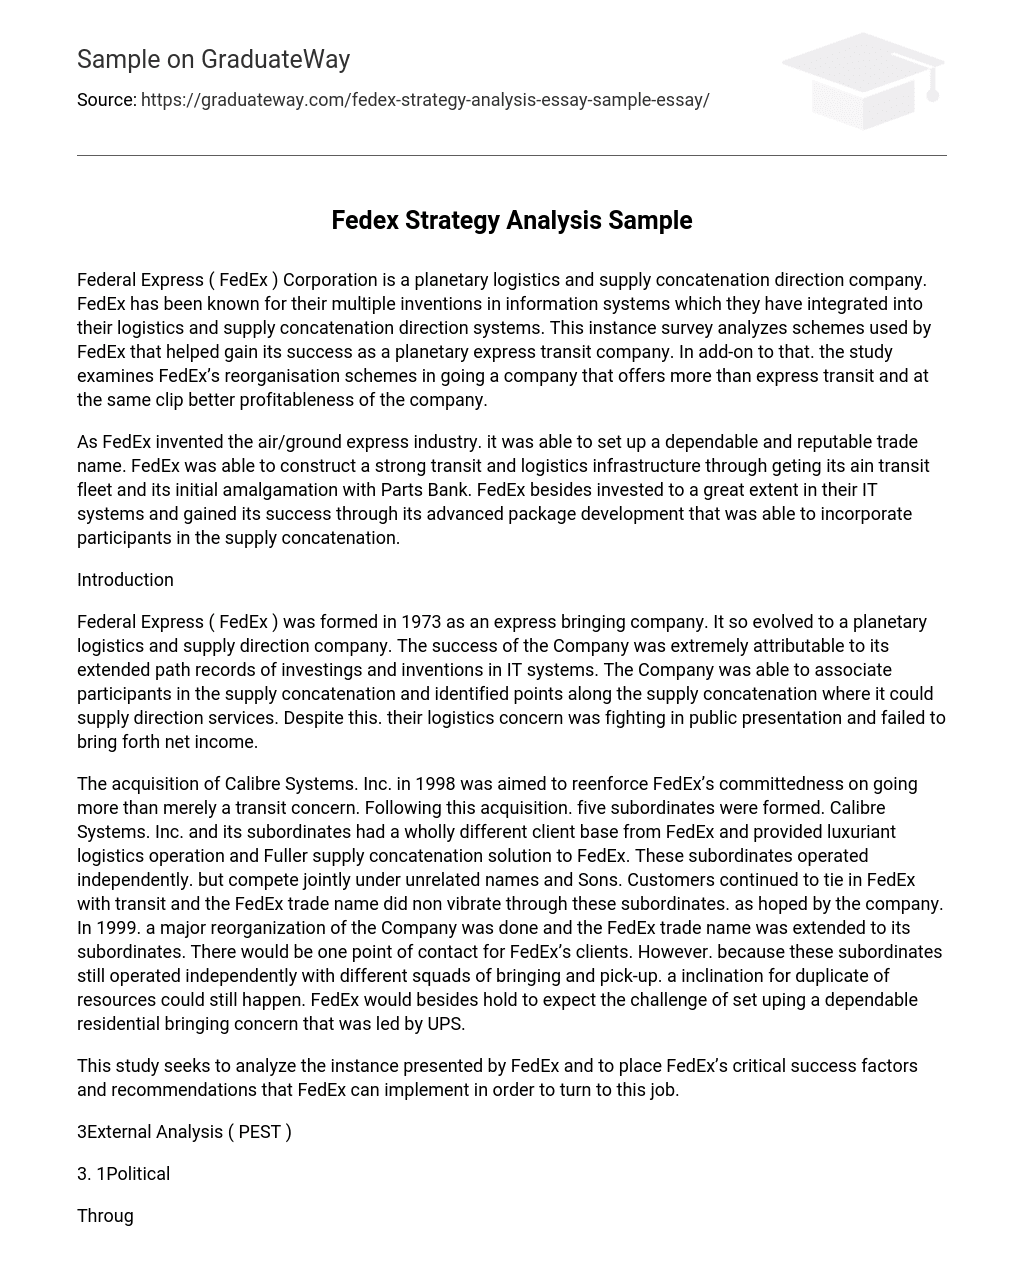 Fedex Strategy Analysis Sample